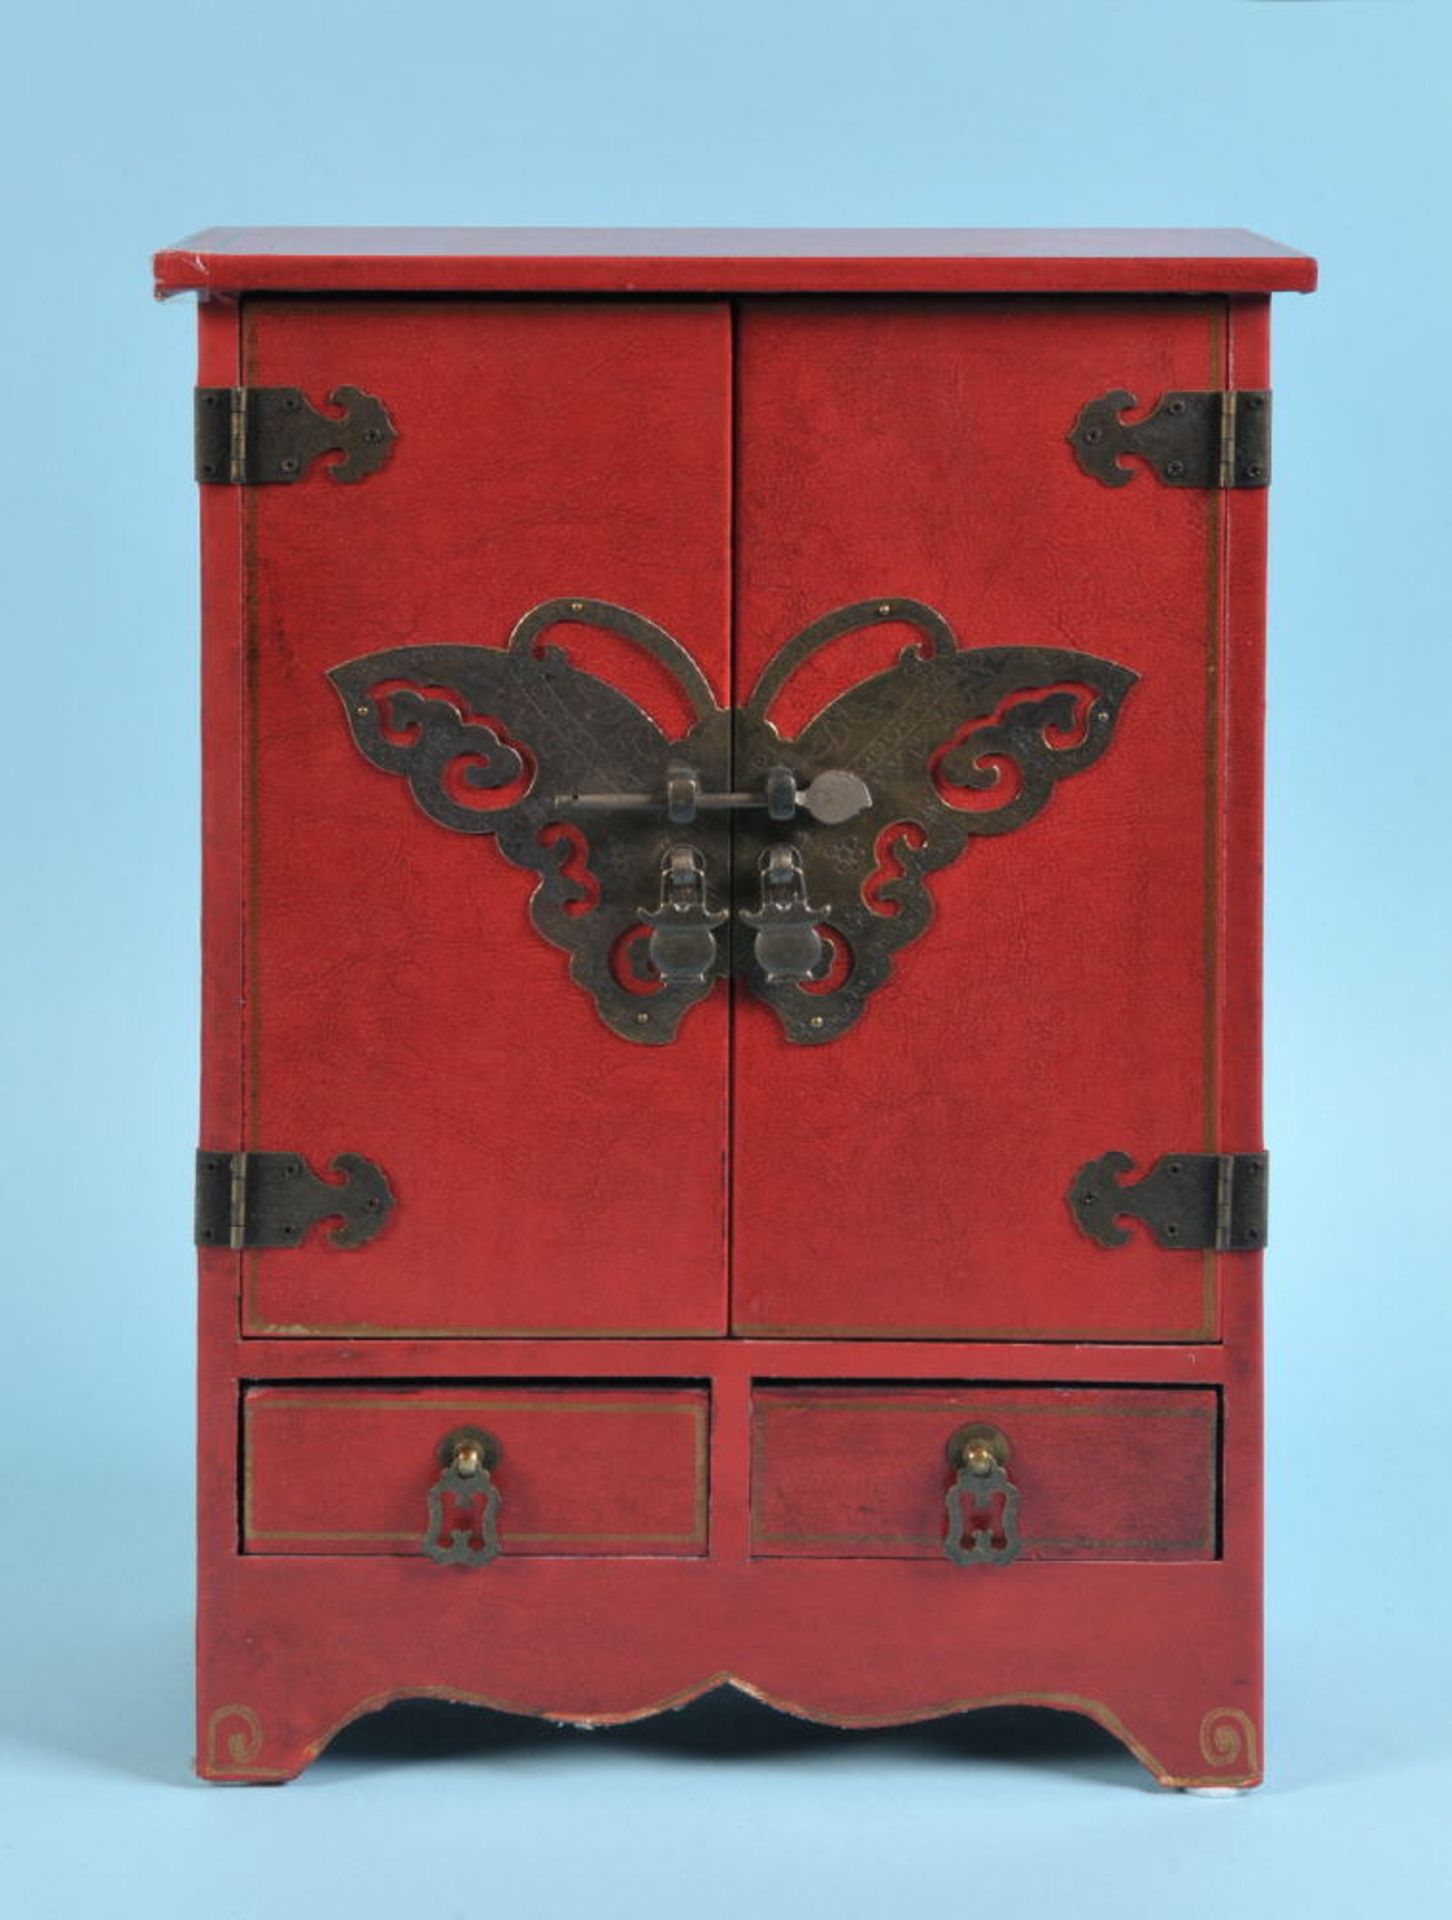 MiniaturschränkchenHolz/Kunstlederbezug, handbemalt, Metallbeschlag in Schmetterlingsform, unten 2